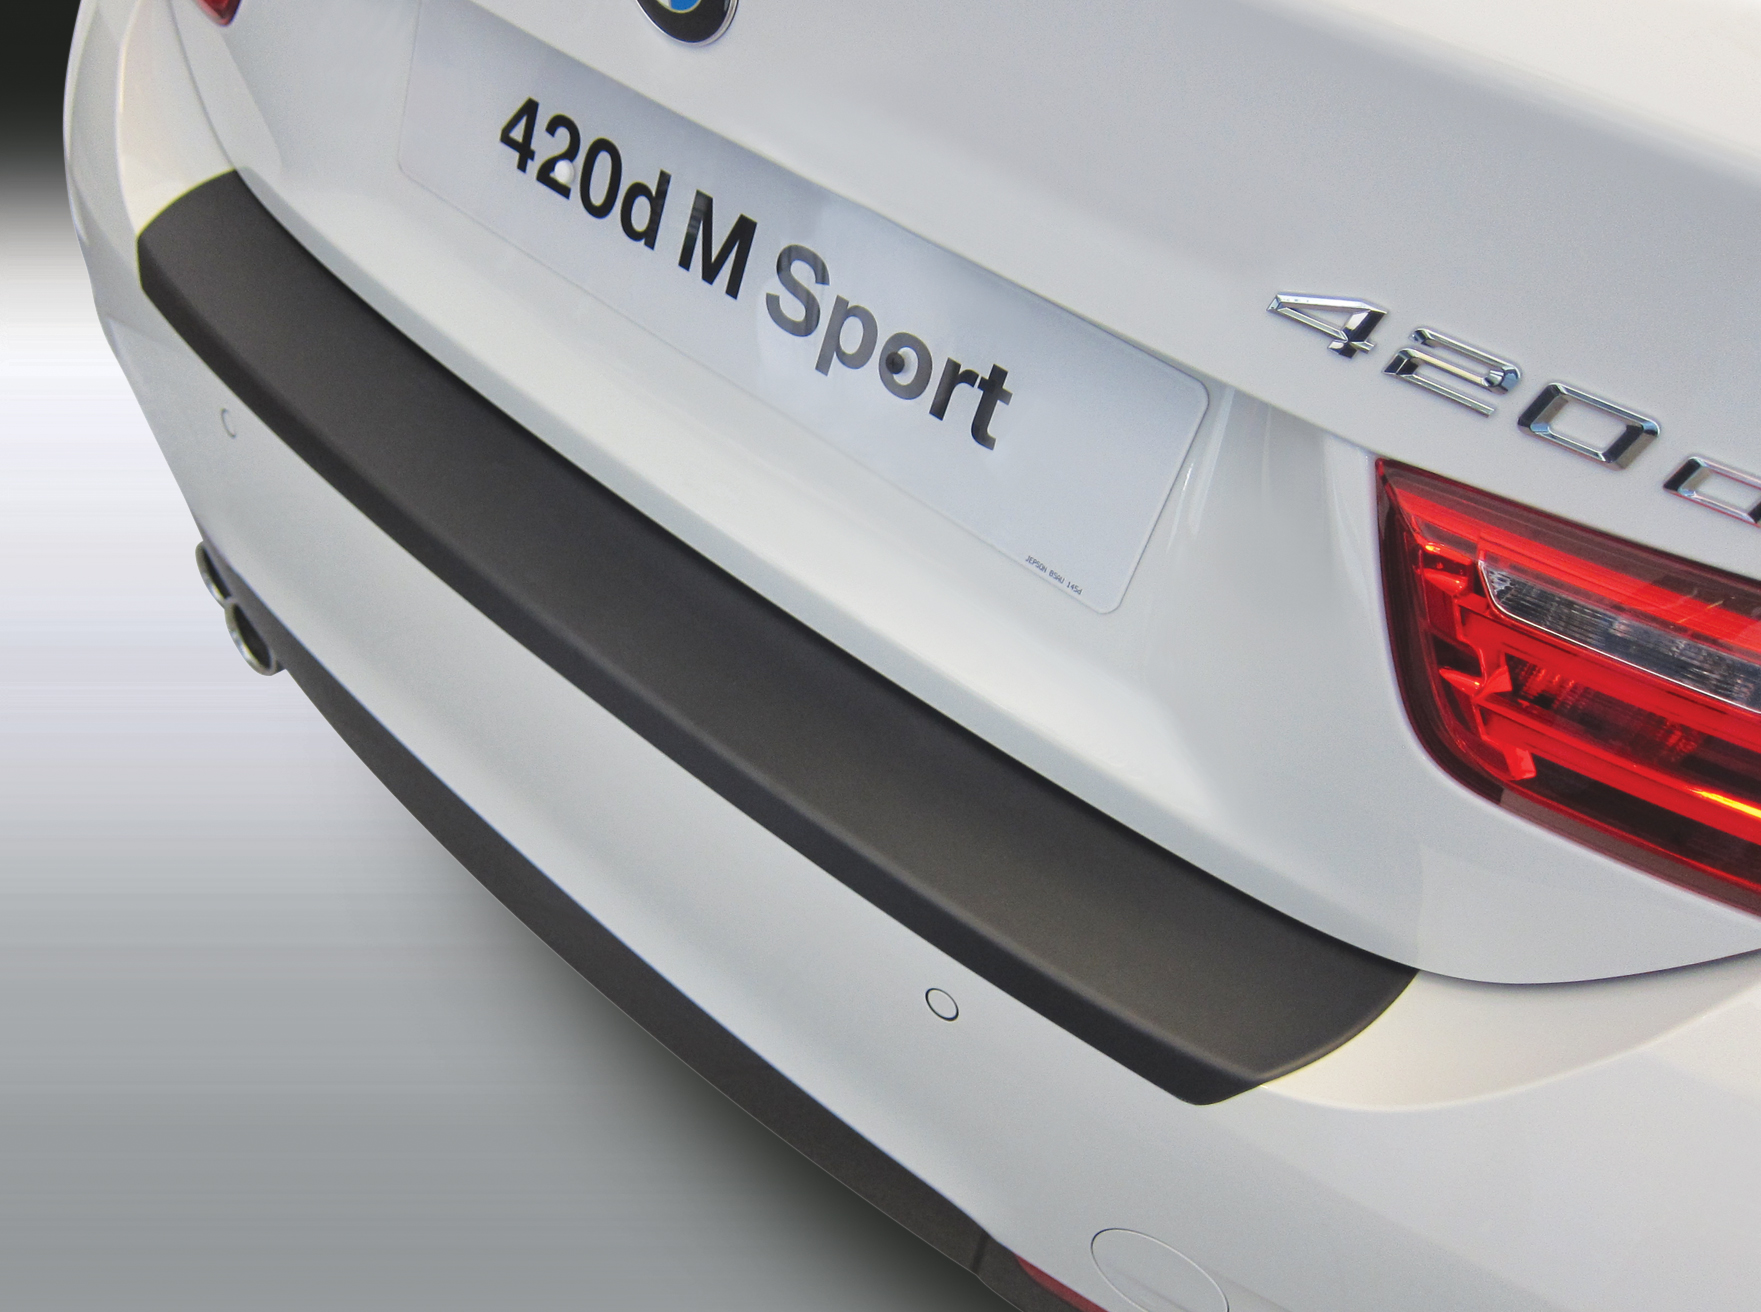 Накладка на задний бампер BMW 4 серии Gran Coupe M Sport, 5-дв. хэтчбек, кузов F36, 2014-н.в.